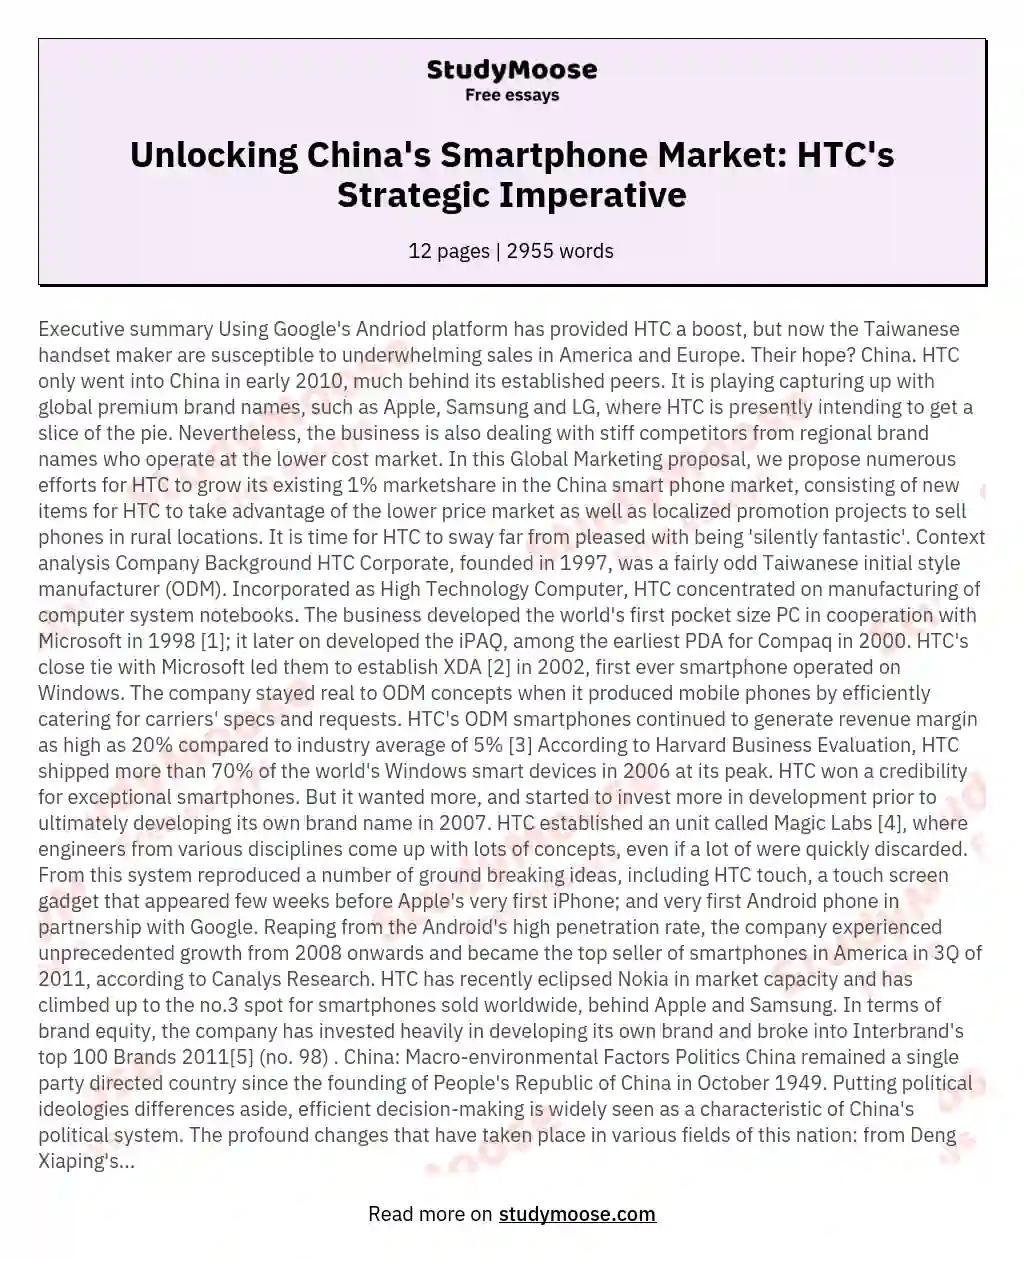 Unlocking China's Smartphone Market: HTC's Strategic Imperative essay